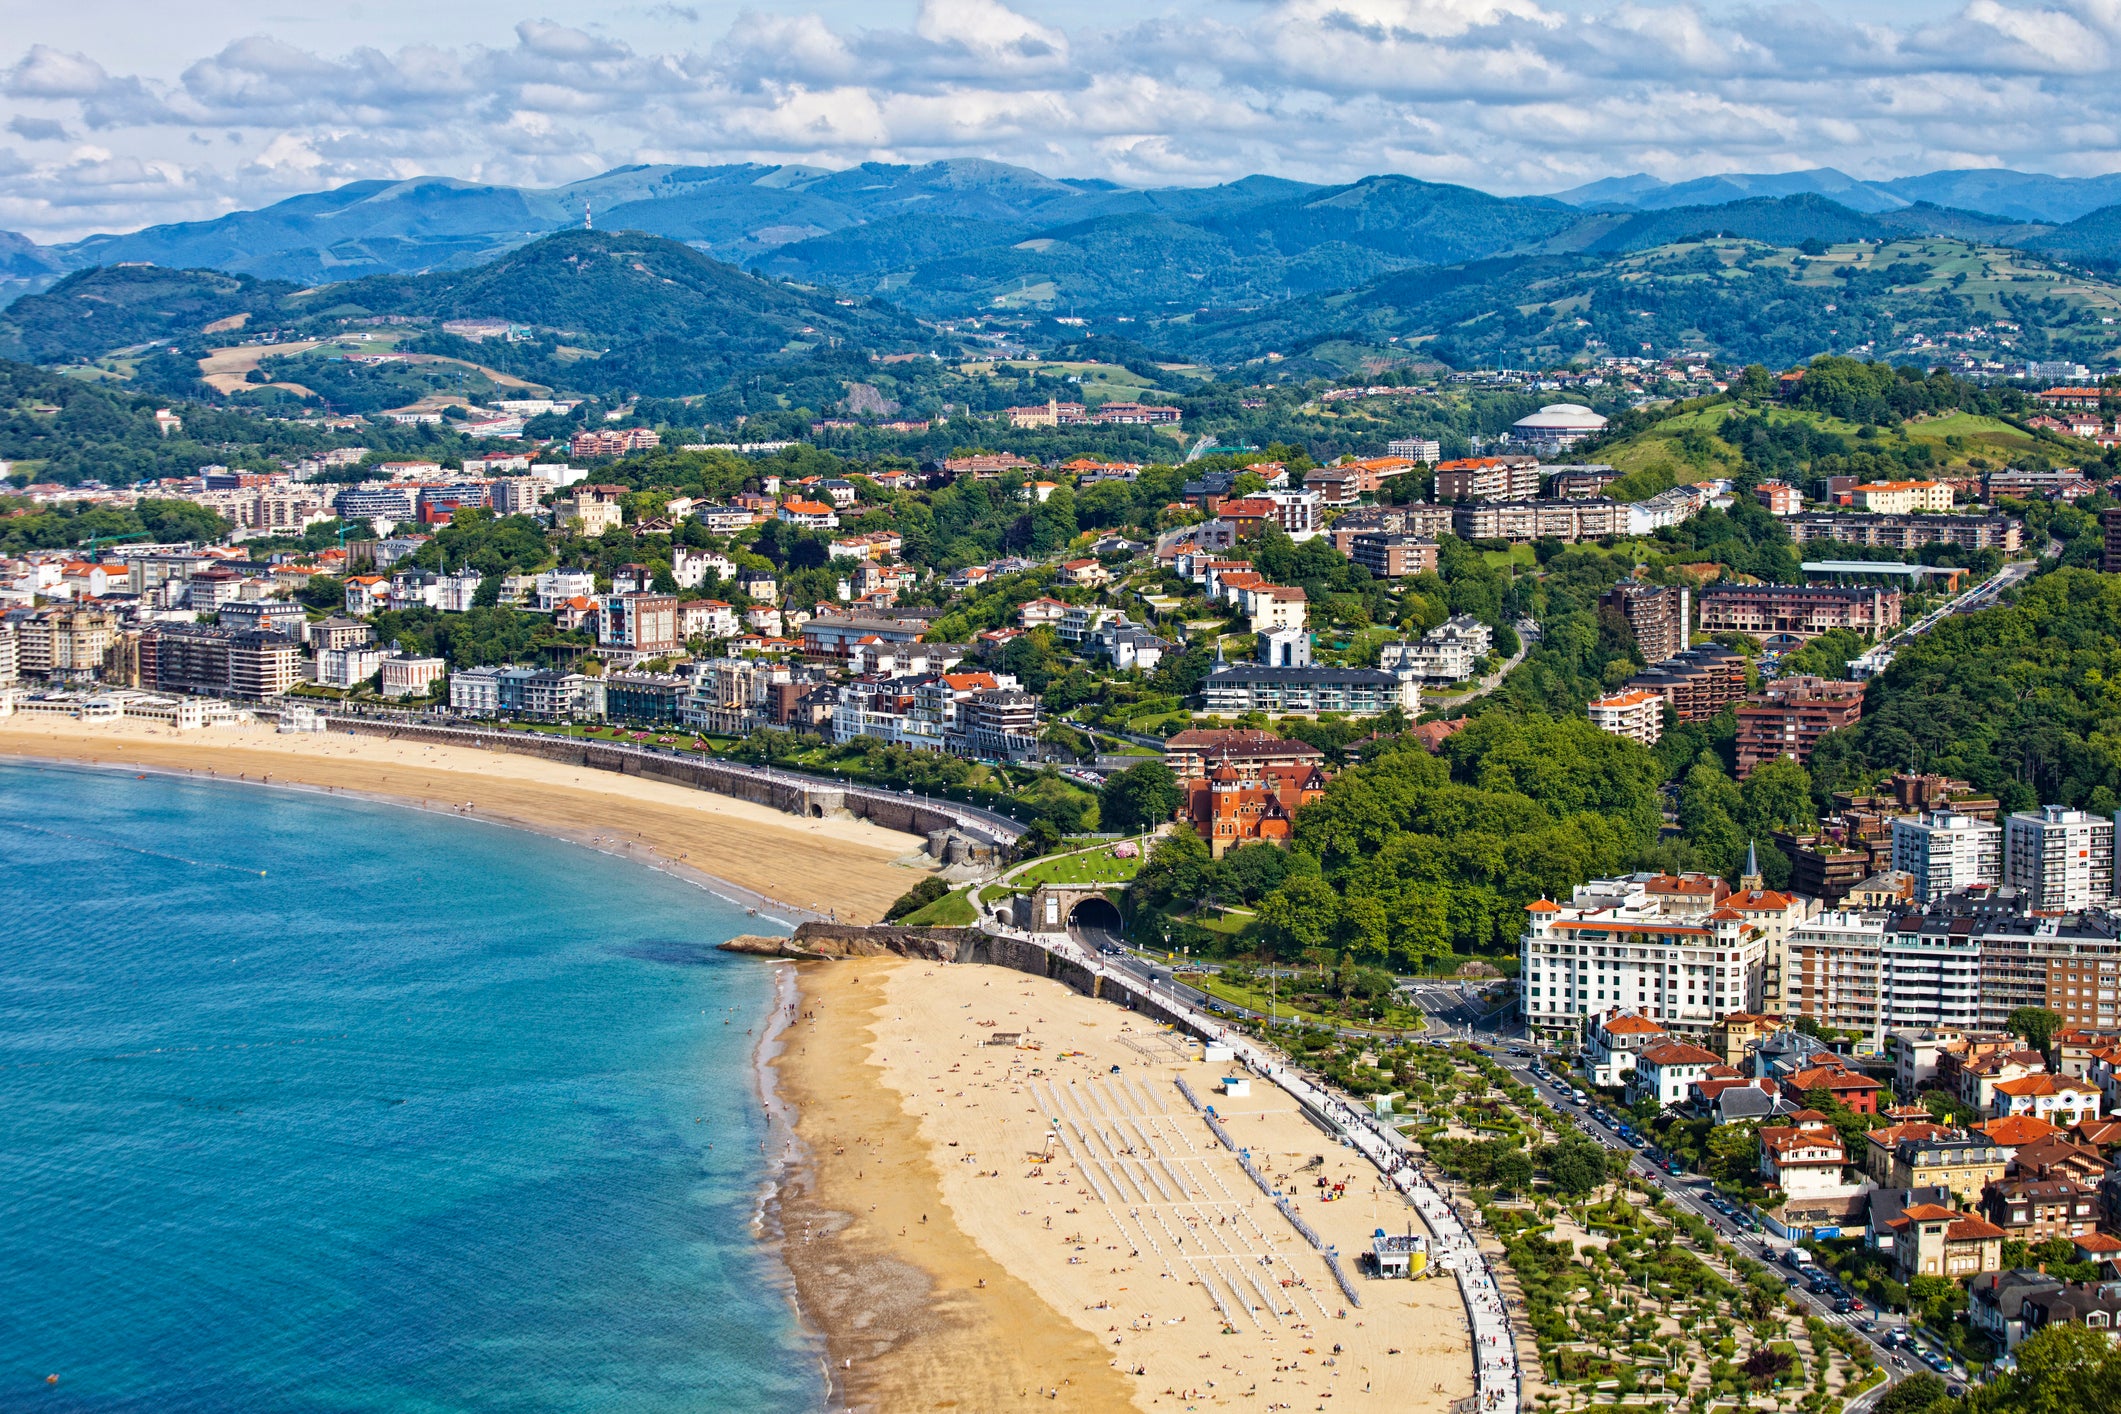 The golden coastline of San Sebastián